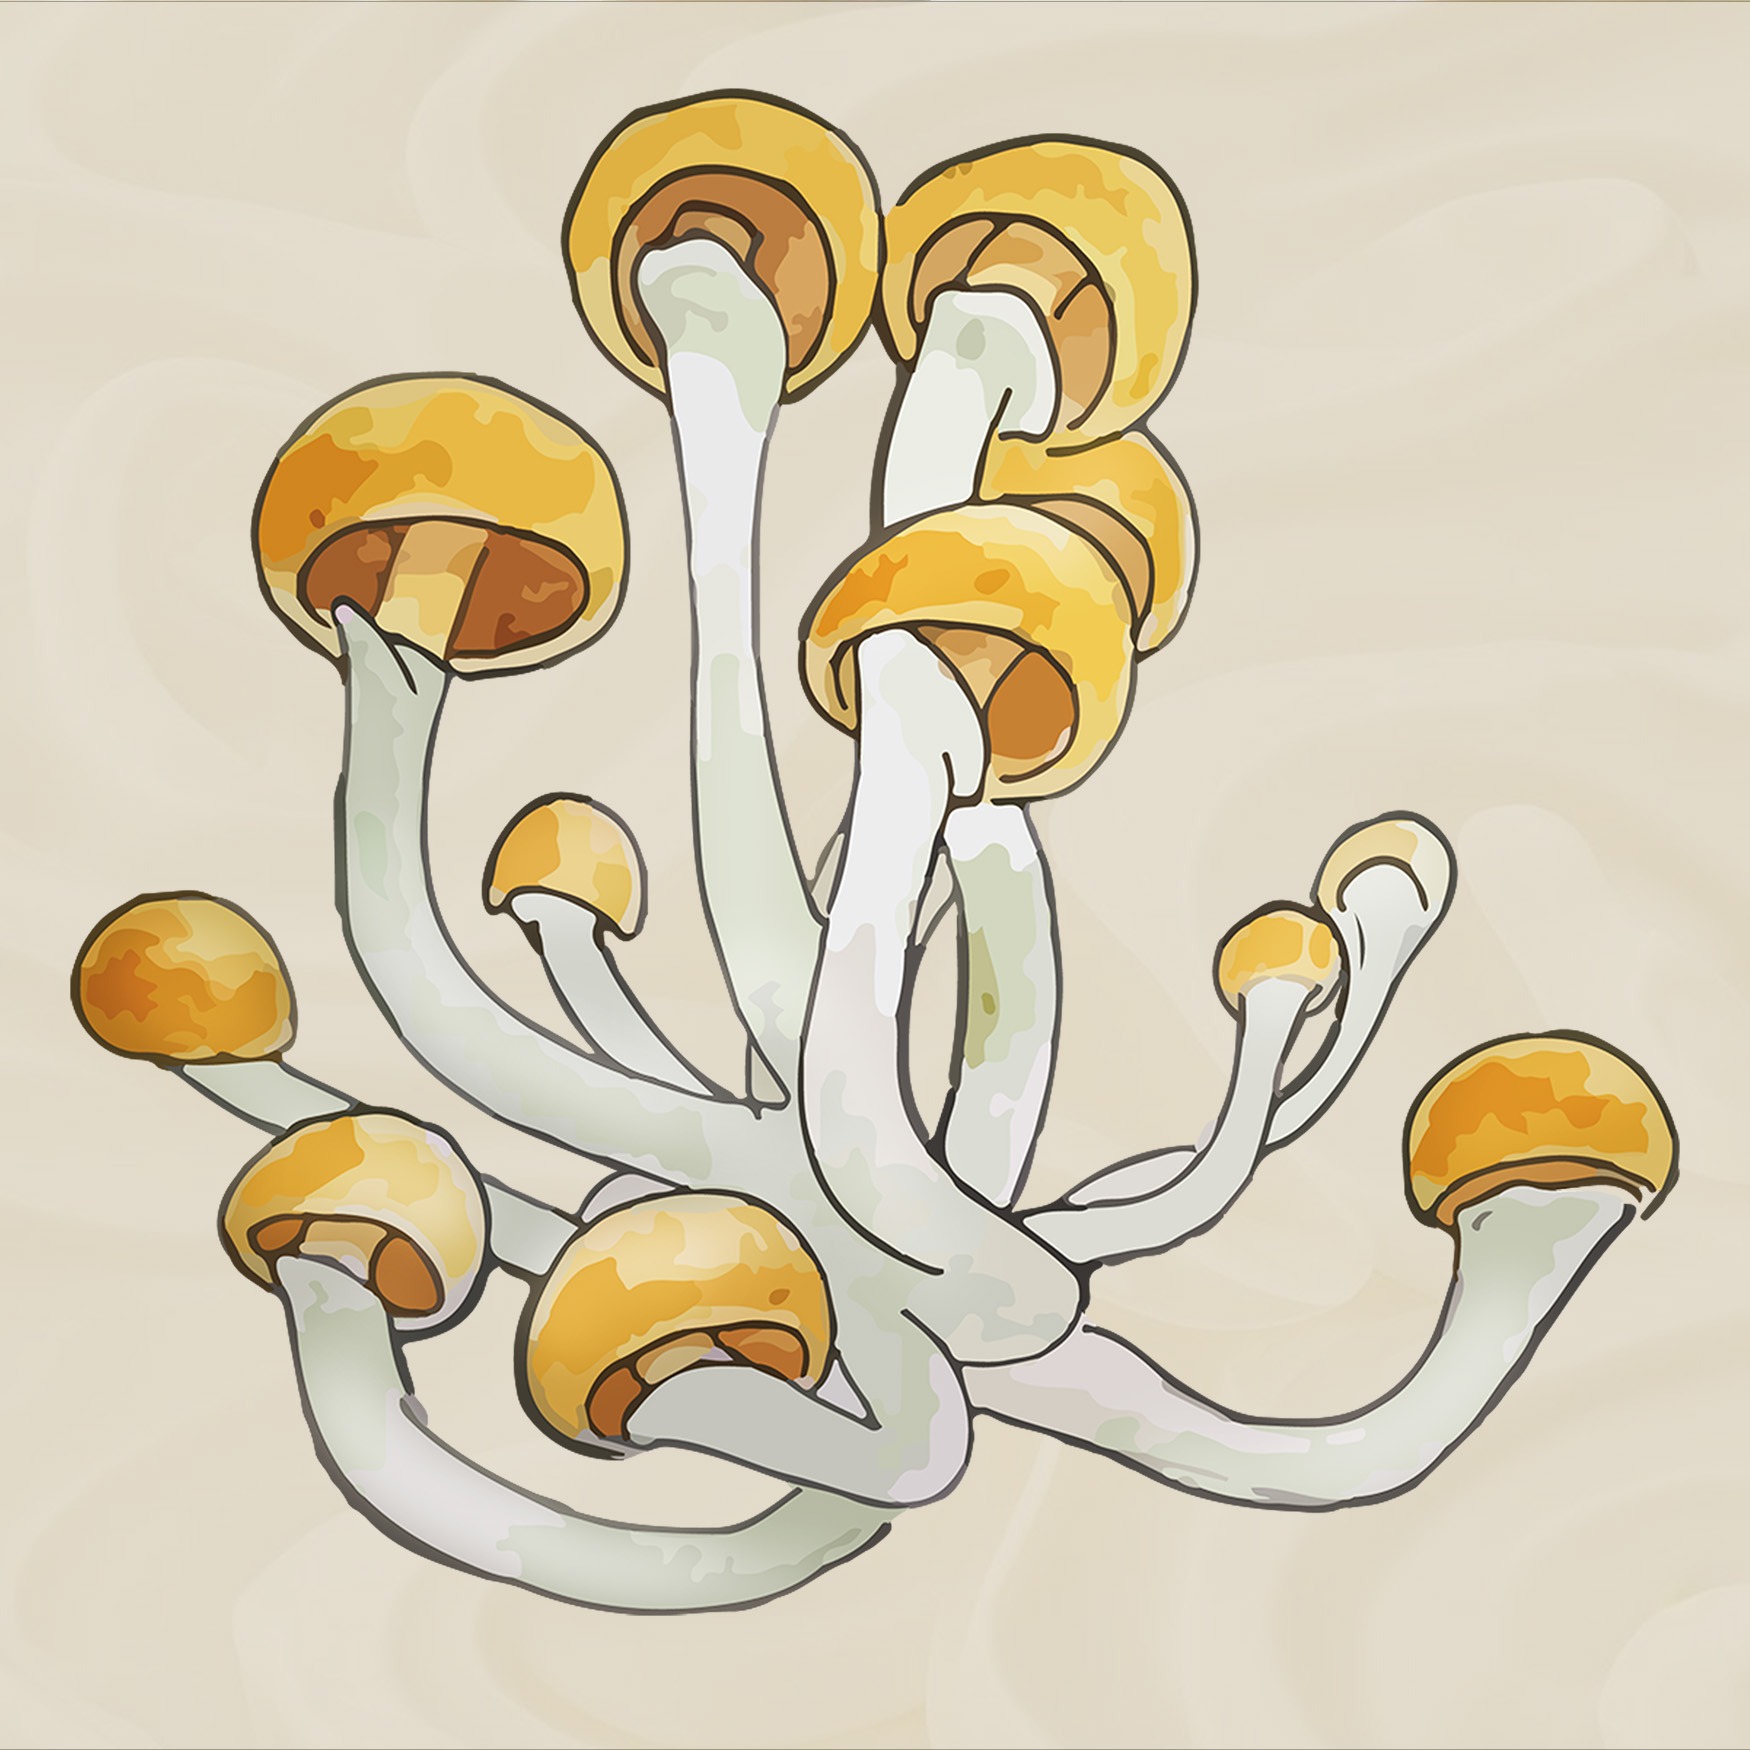 growkit jedi mind fuck growbox mushroom